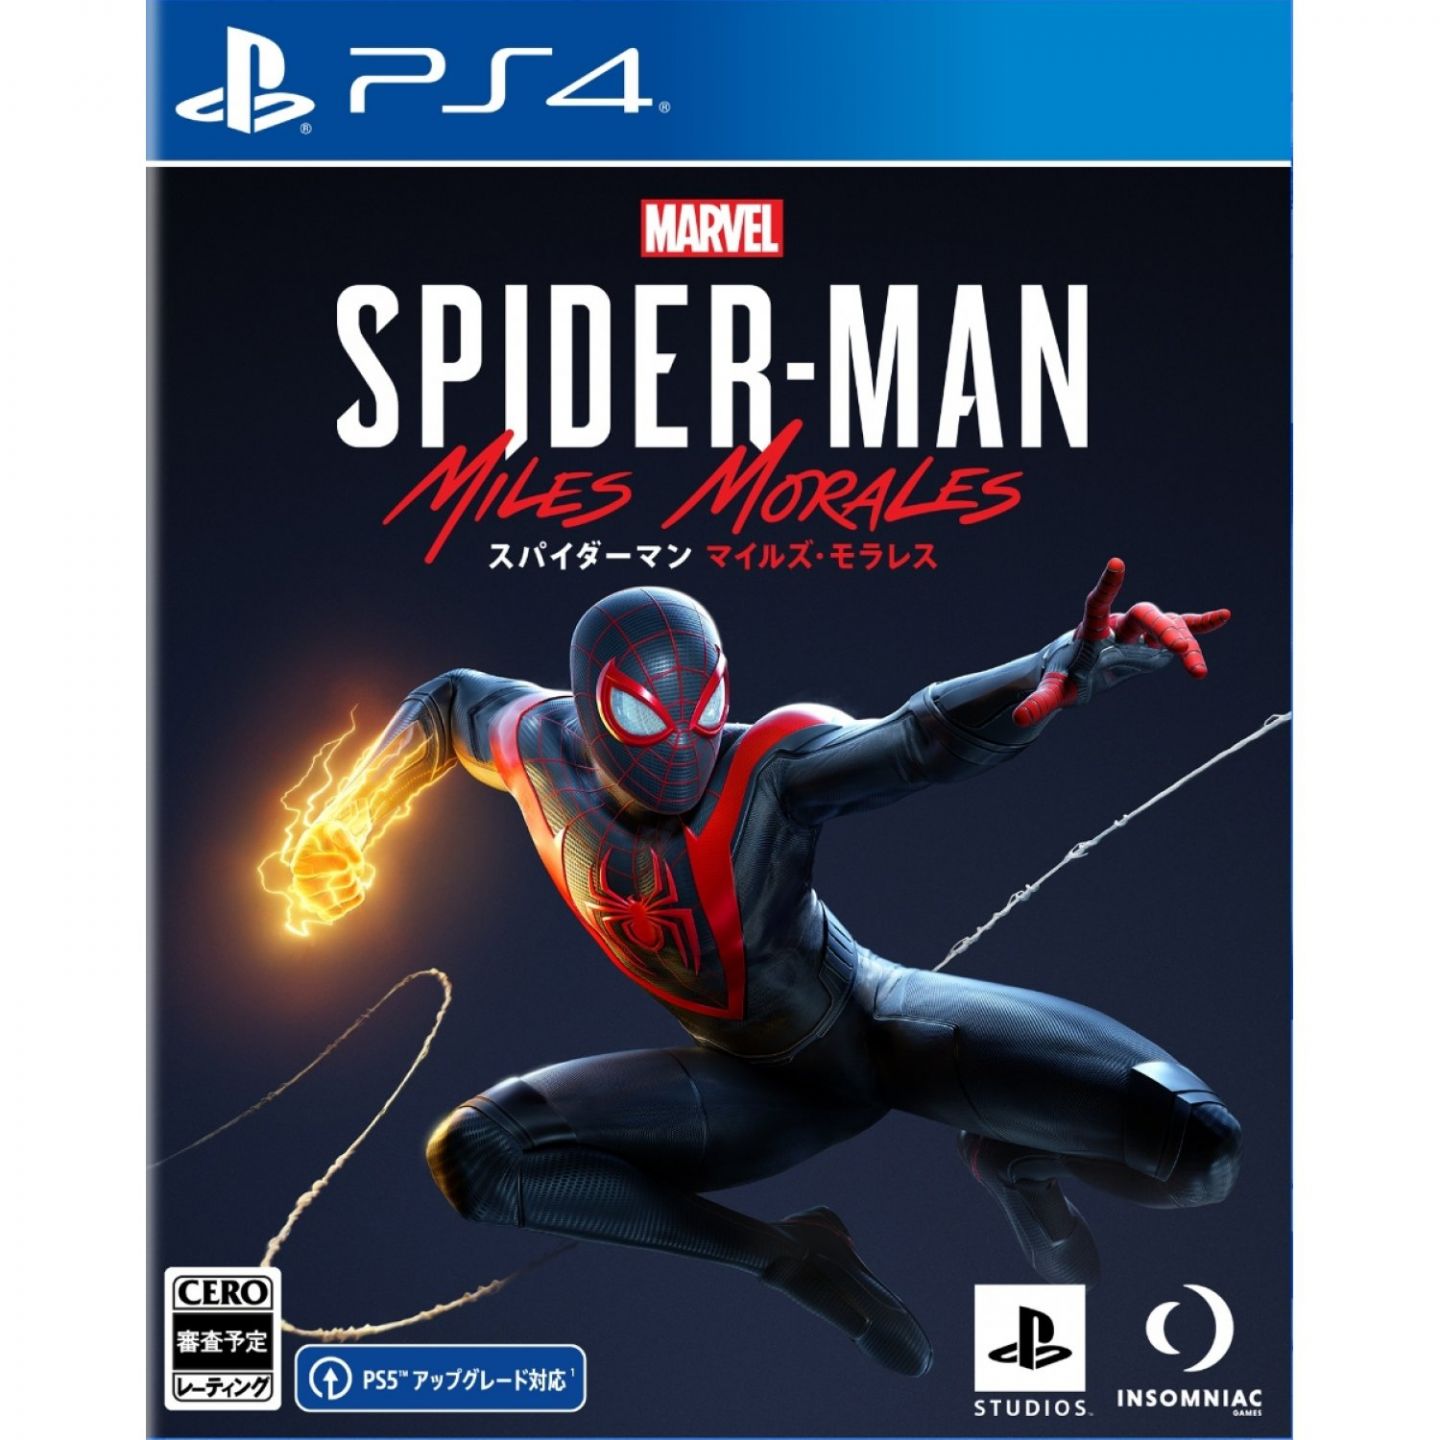 Marvel's Spider-Man: Miles Morales - PlayStation 5 